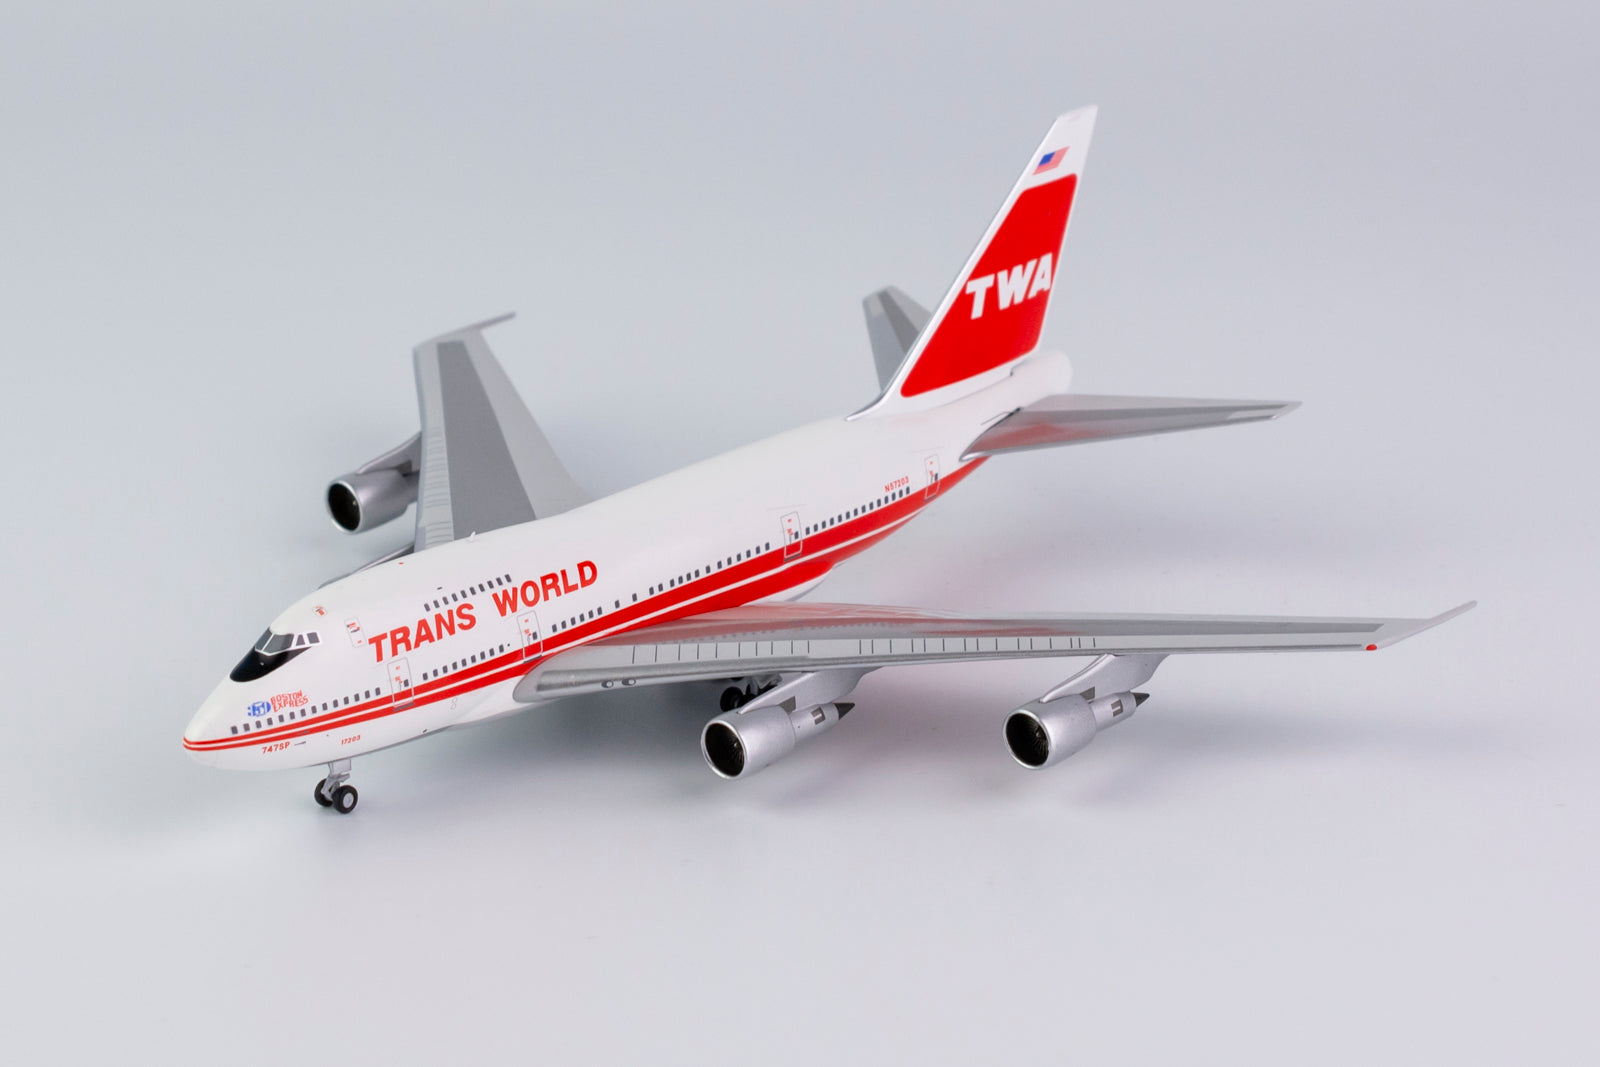 What Happened To TWA's Boeing 747s?